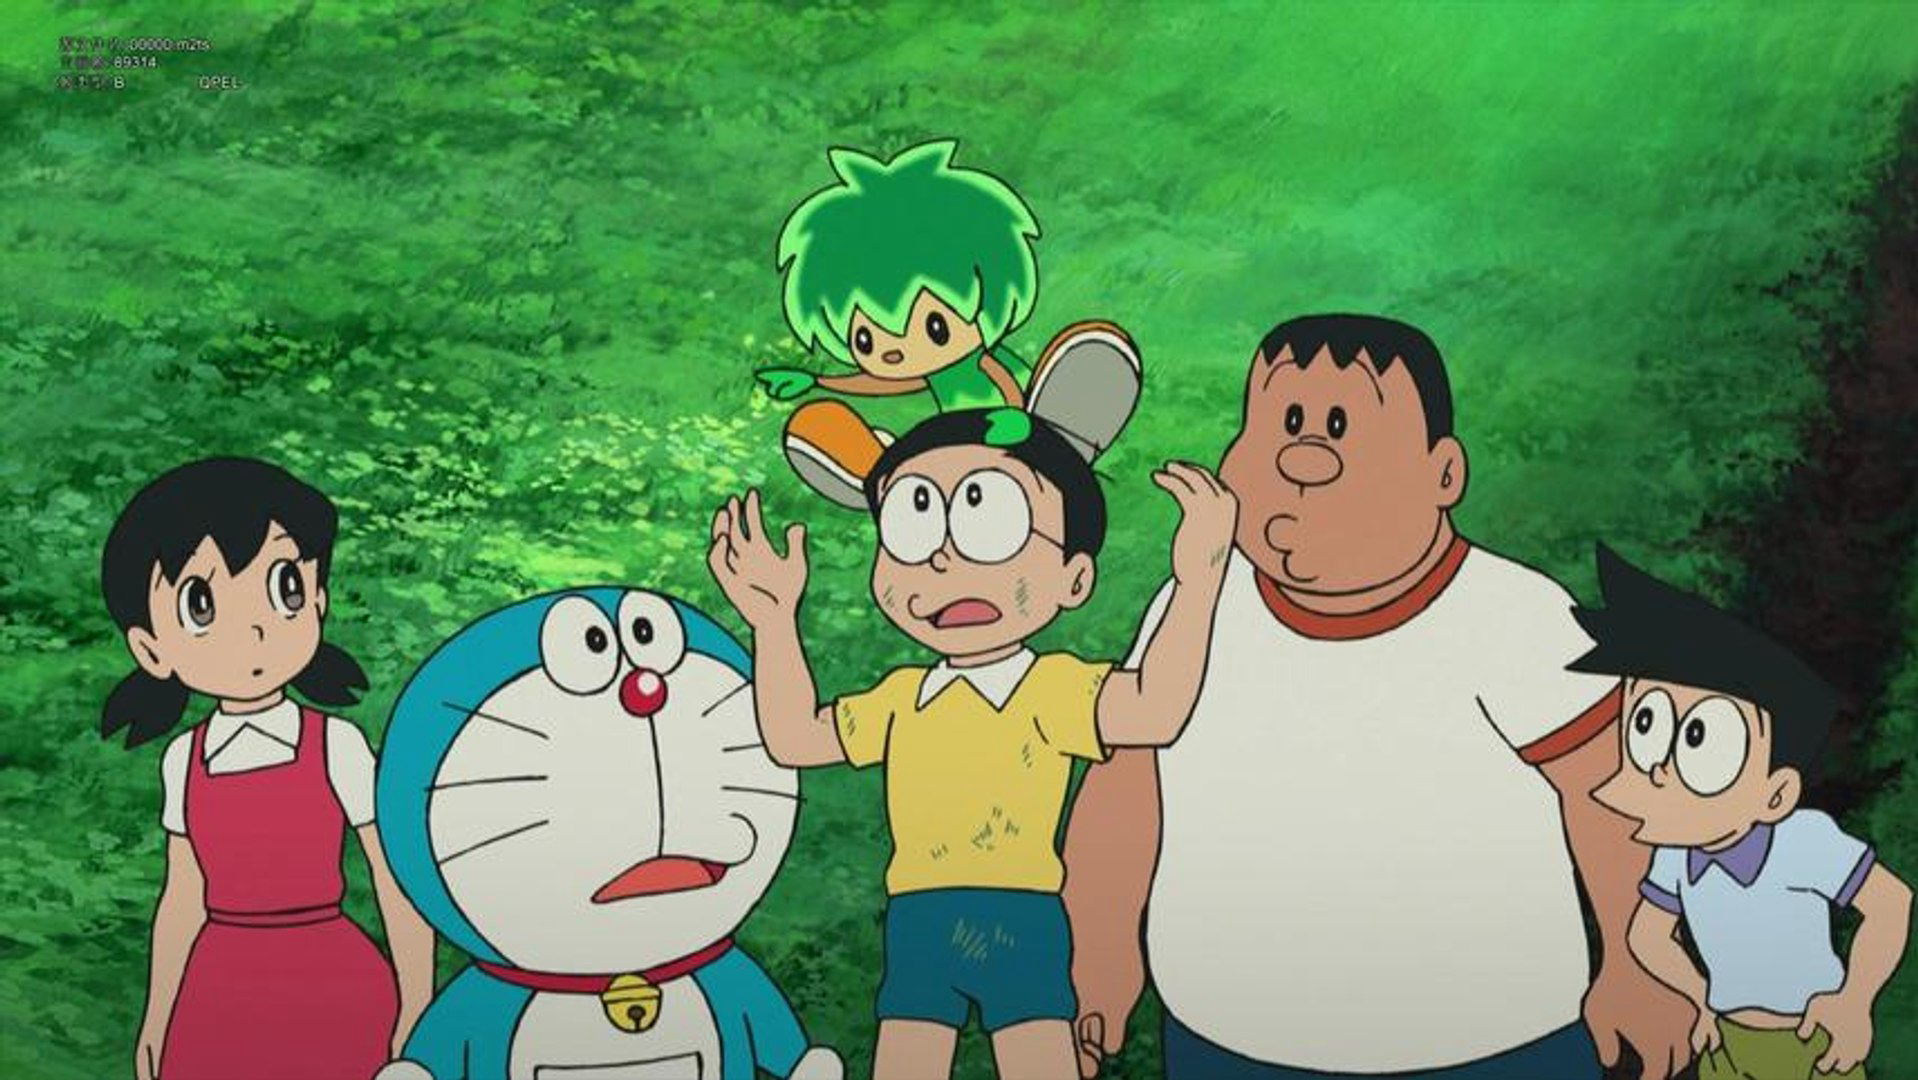 Doraemon the Movie: Nobita and the Green Giant Legend / Doraemon the Movie: Nobita and the Green Giant Legend (2008)